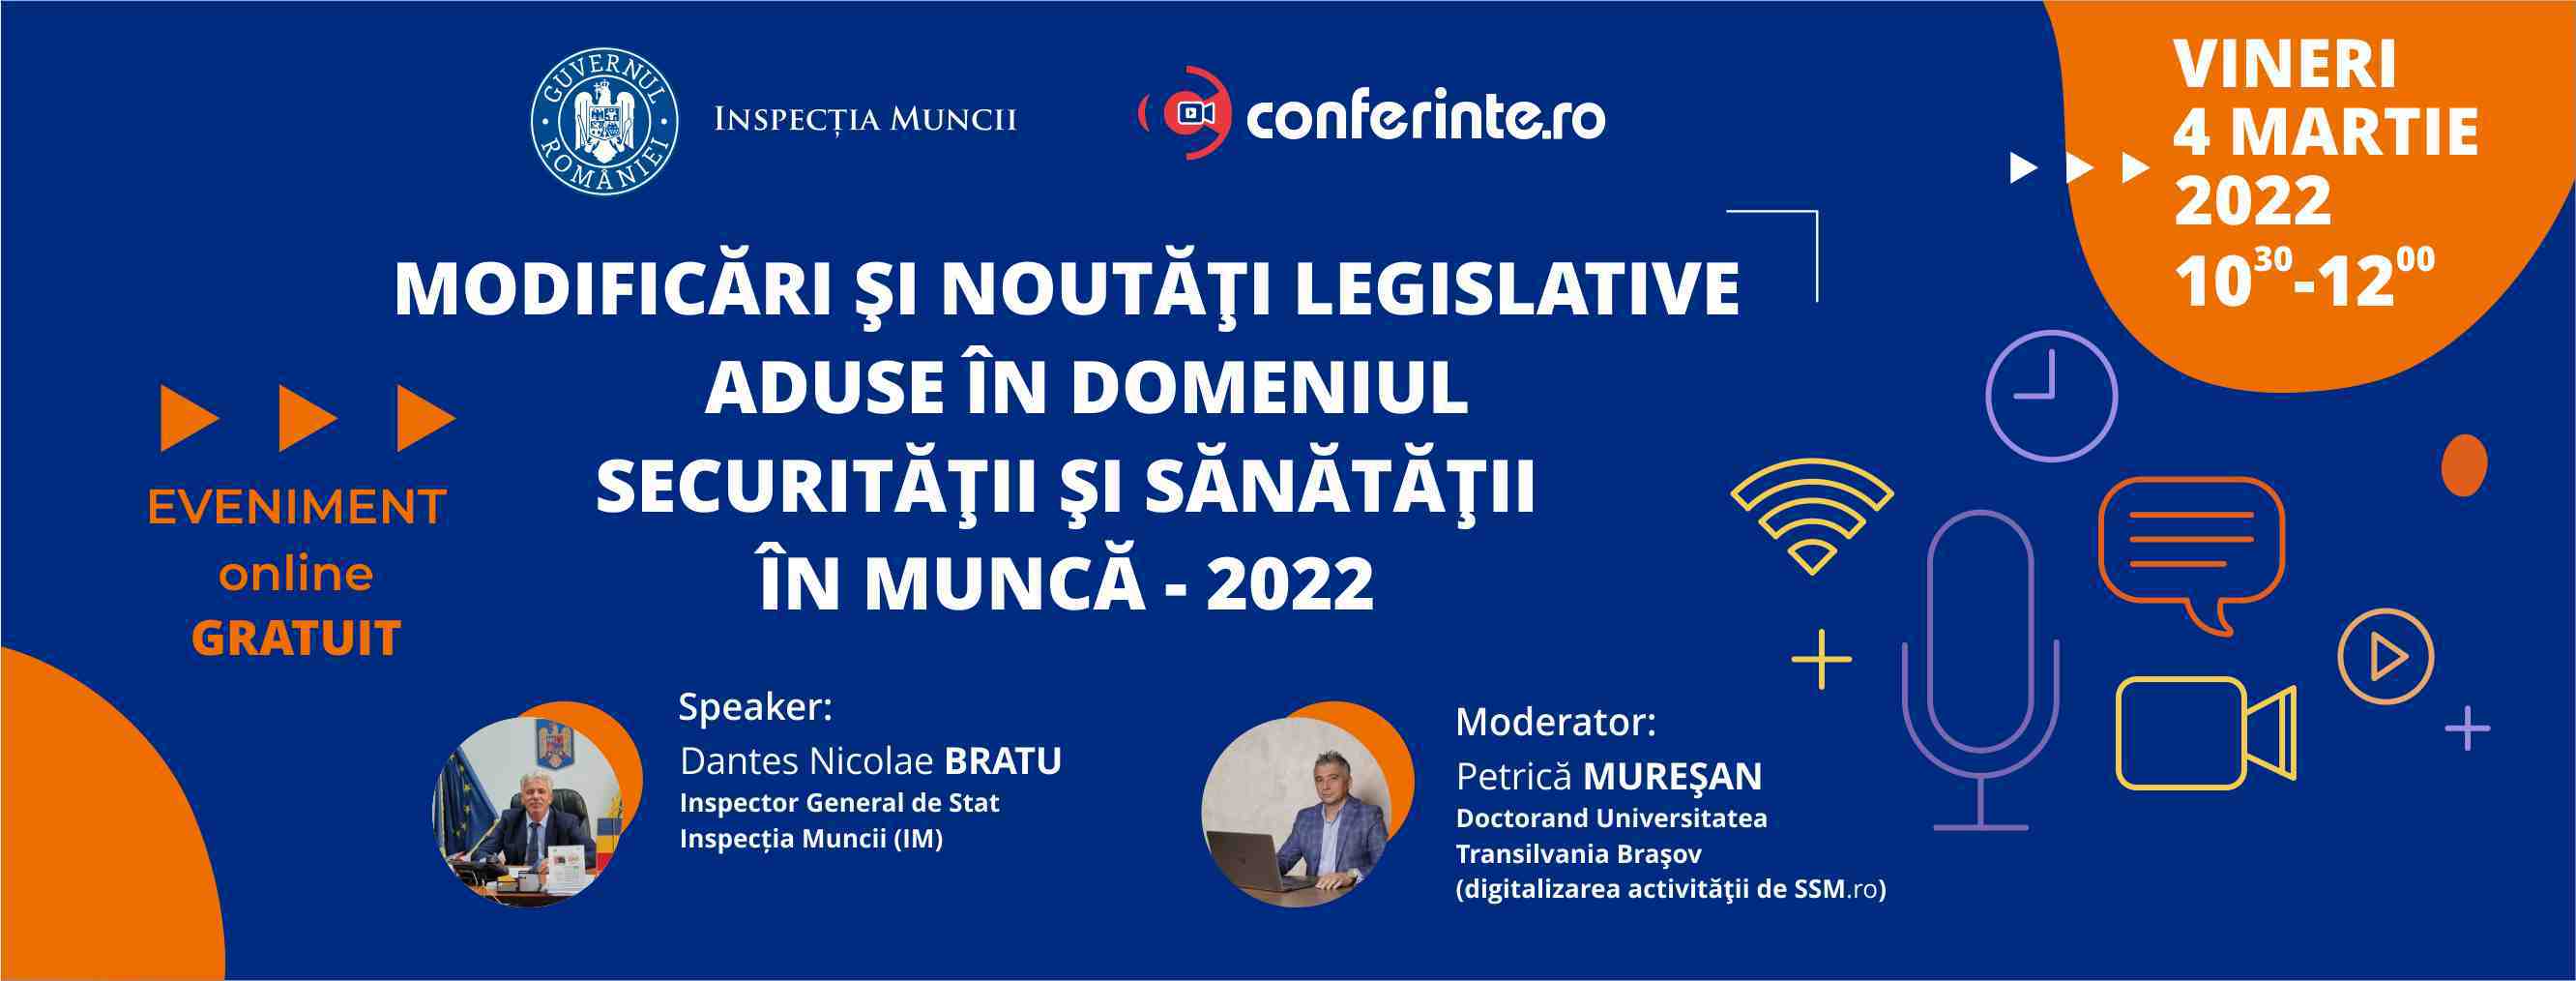 EVENIMENT online GRATUIT: Modiﬁcari si noutati legislative aduse  in domeniul Securitatii si Sanatatii in Munca – 2022